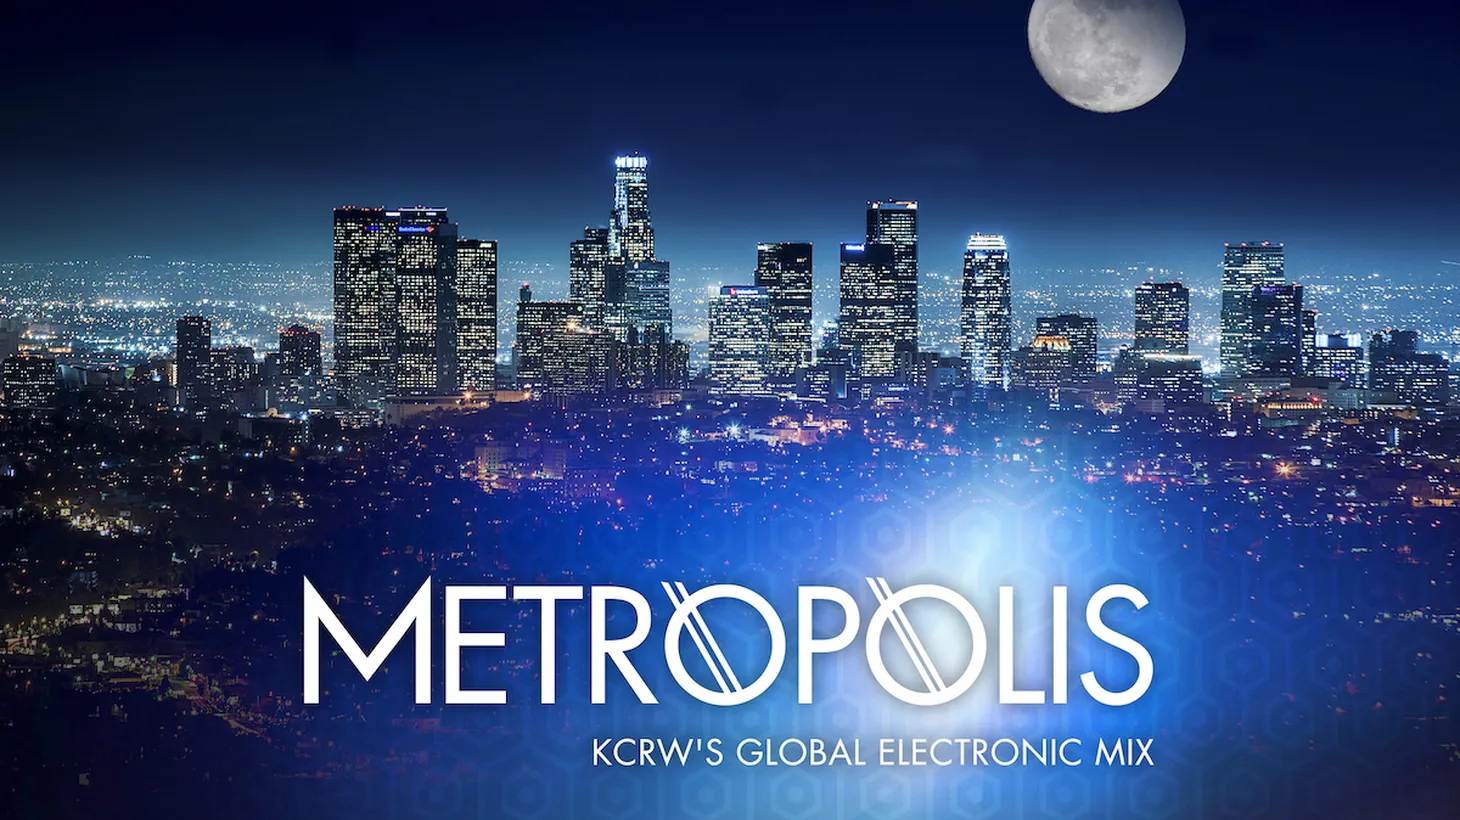 Metropolis playlist, January 2, 2021.